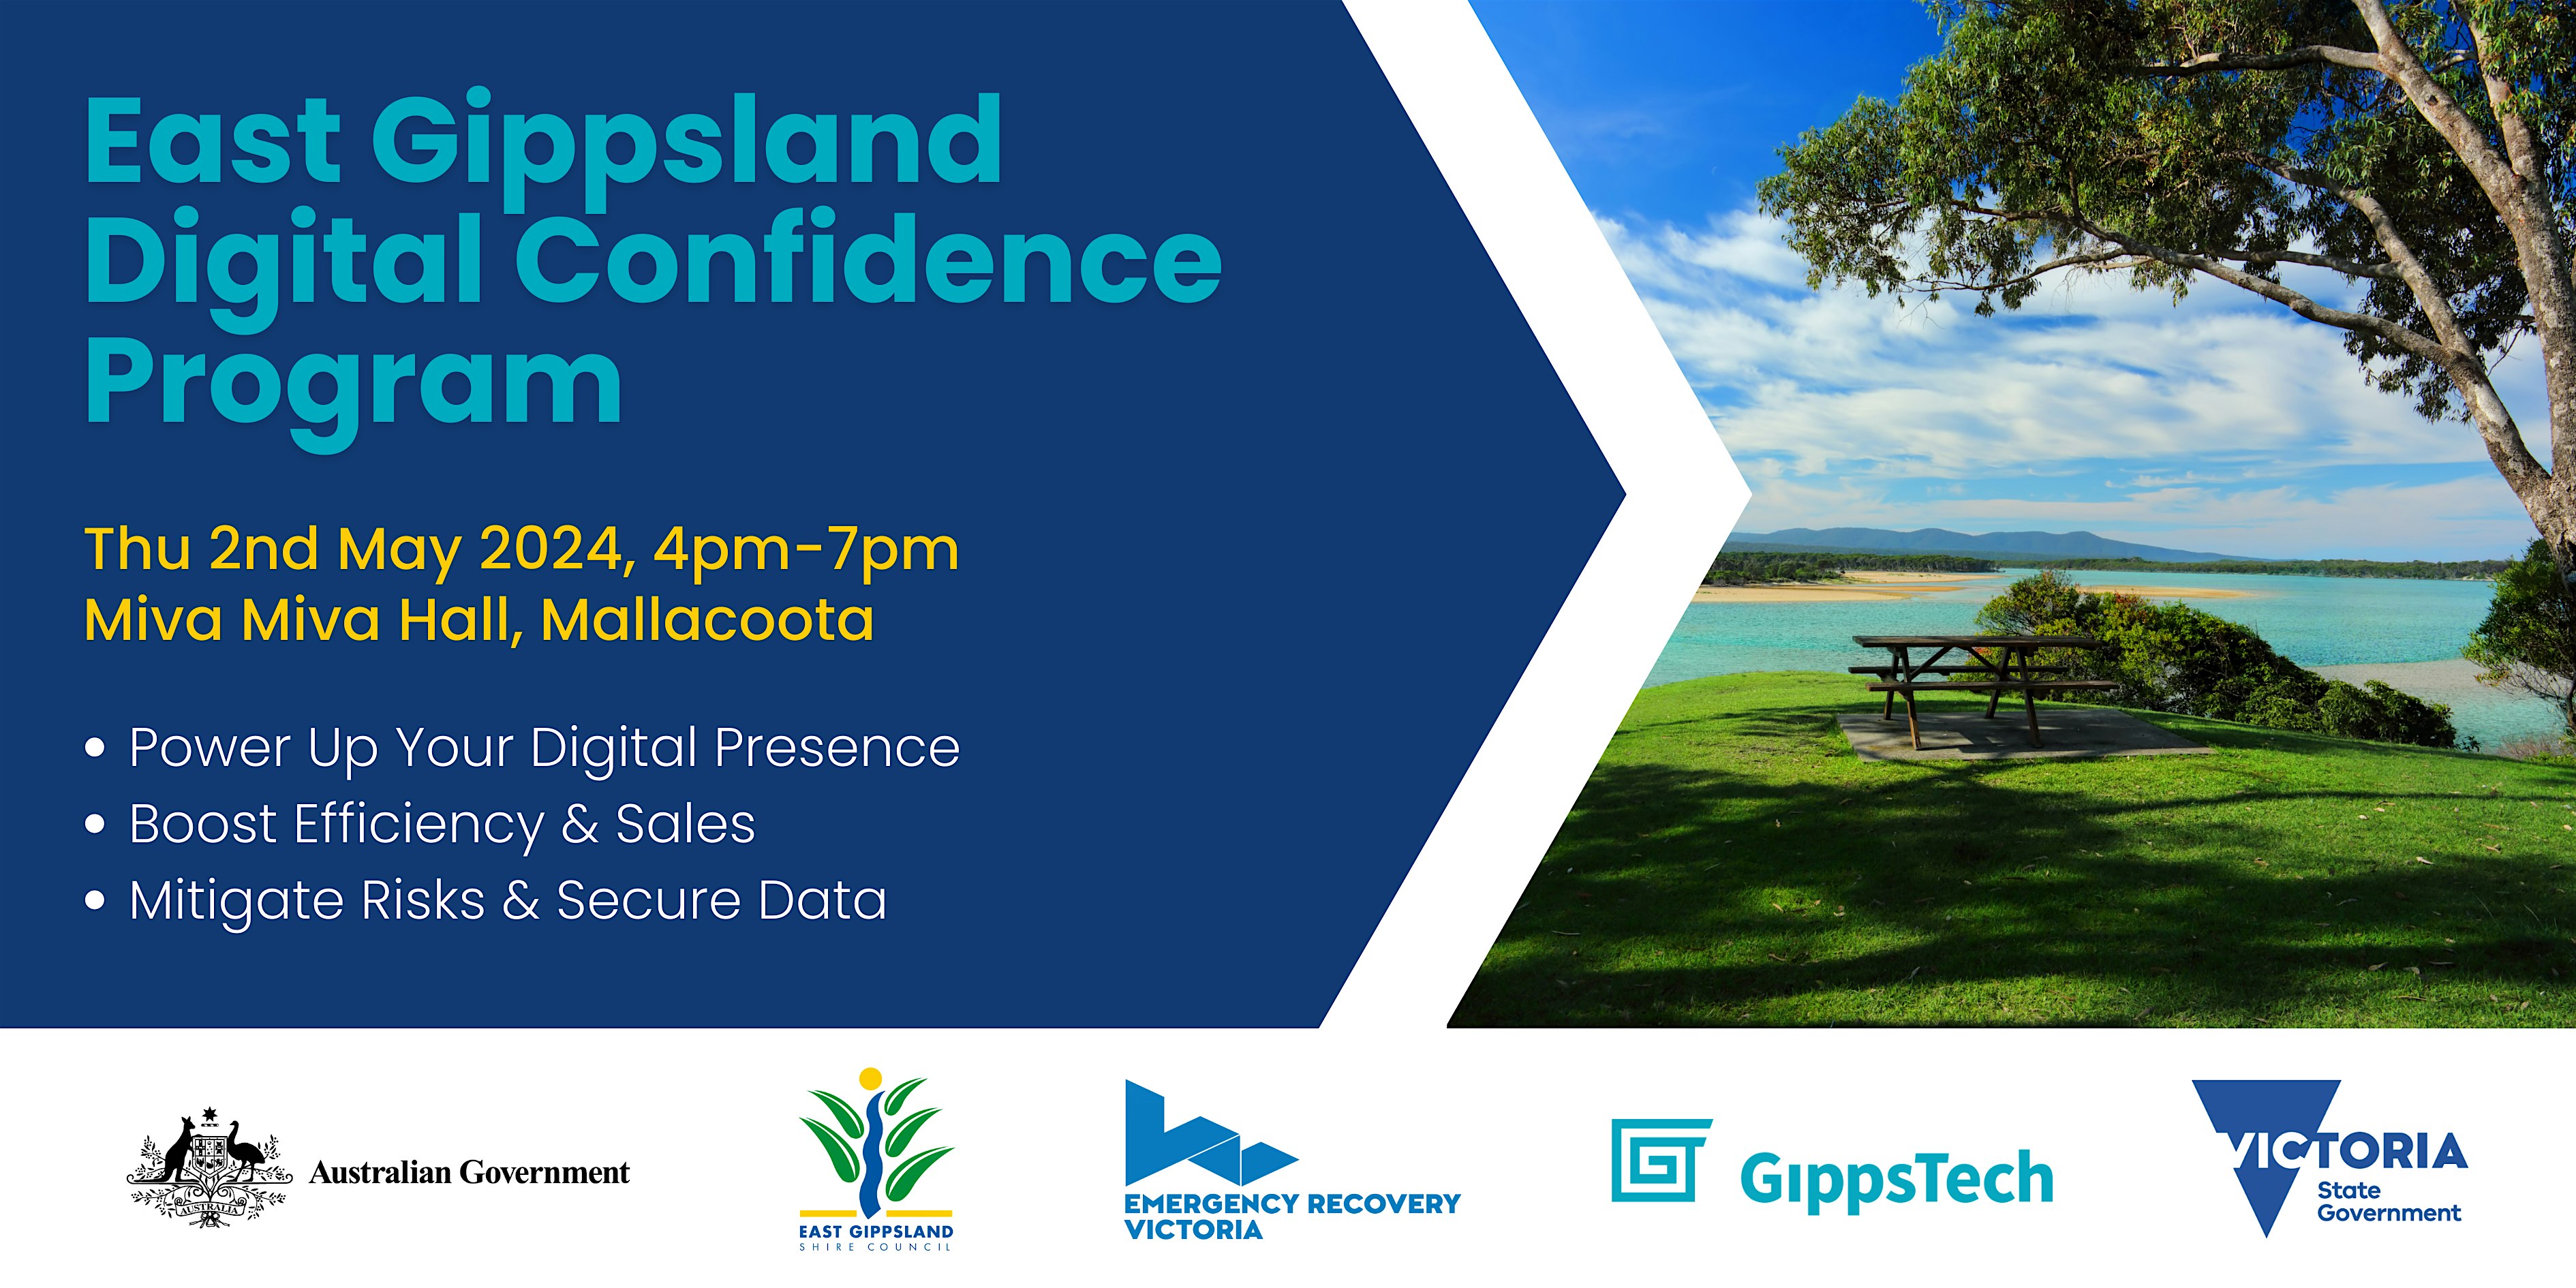 Mallacoota Workshop - East Gippsland Digital Confidence Program